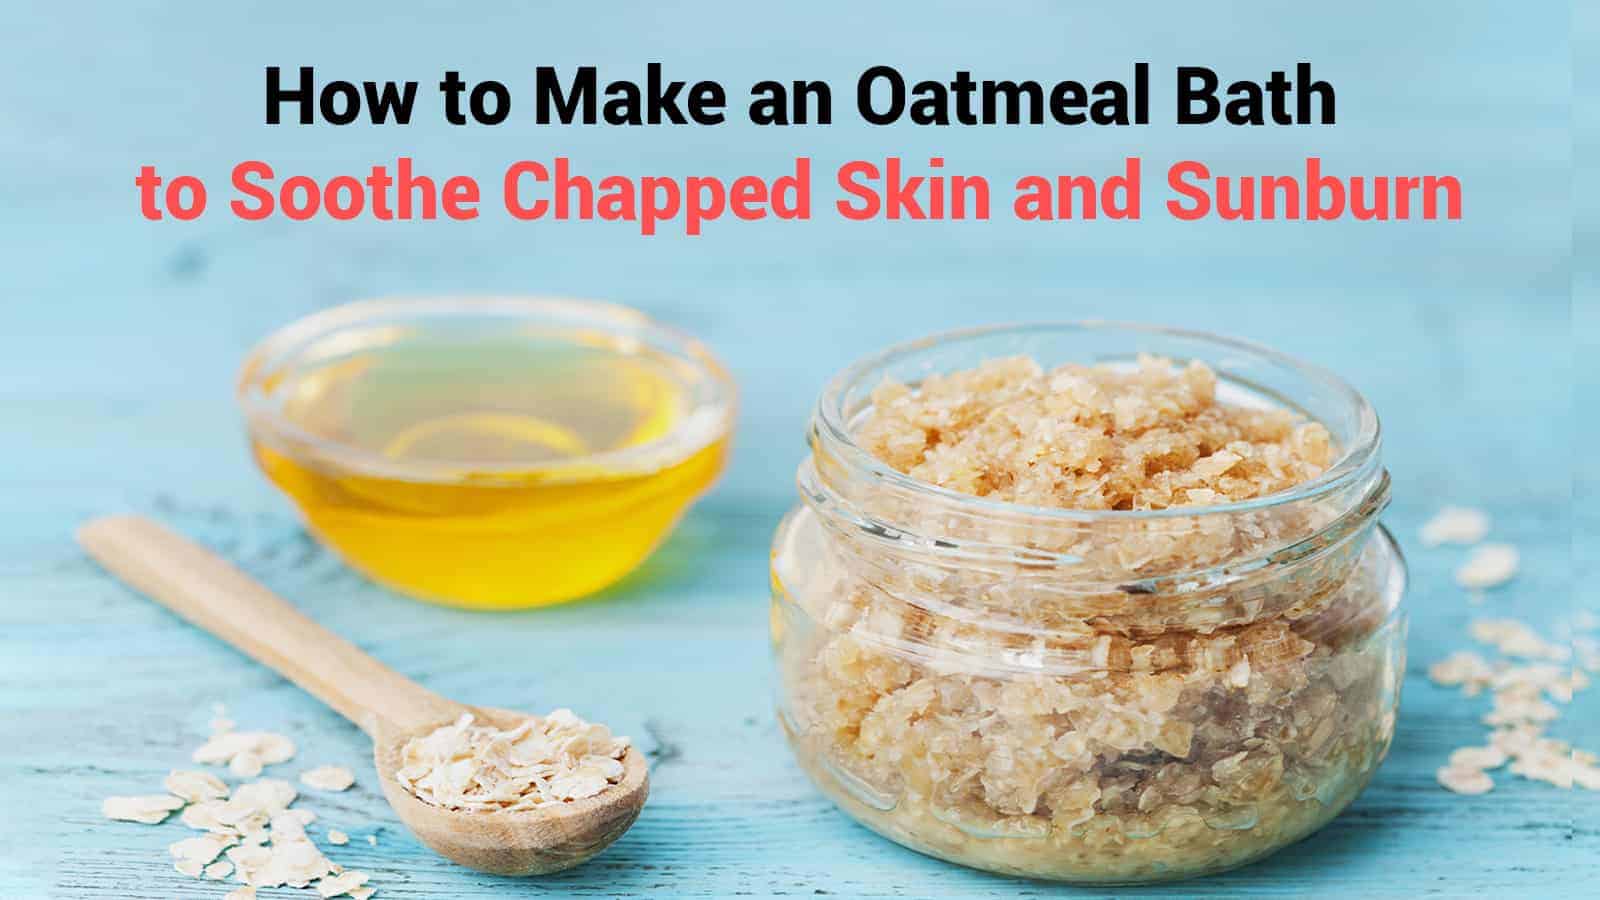 How to Make an Oatmeal Bath to Soothe Chapped Skin and Sunburn